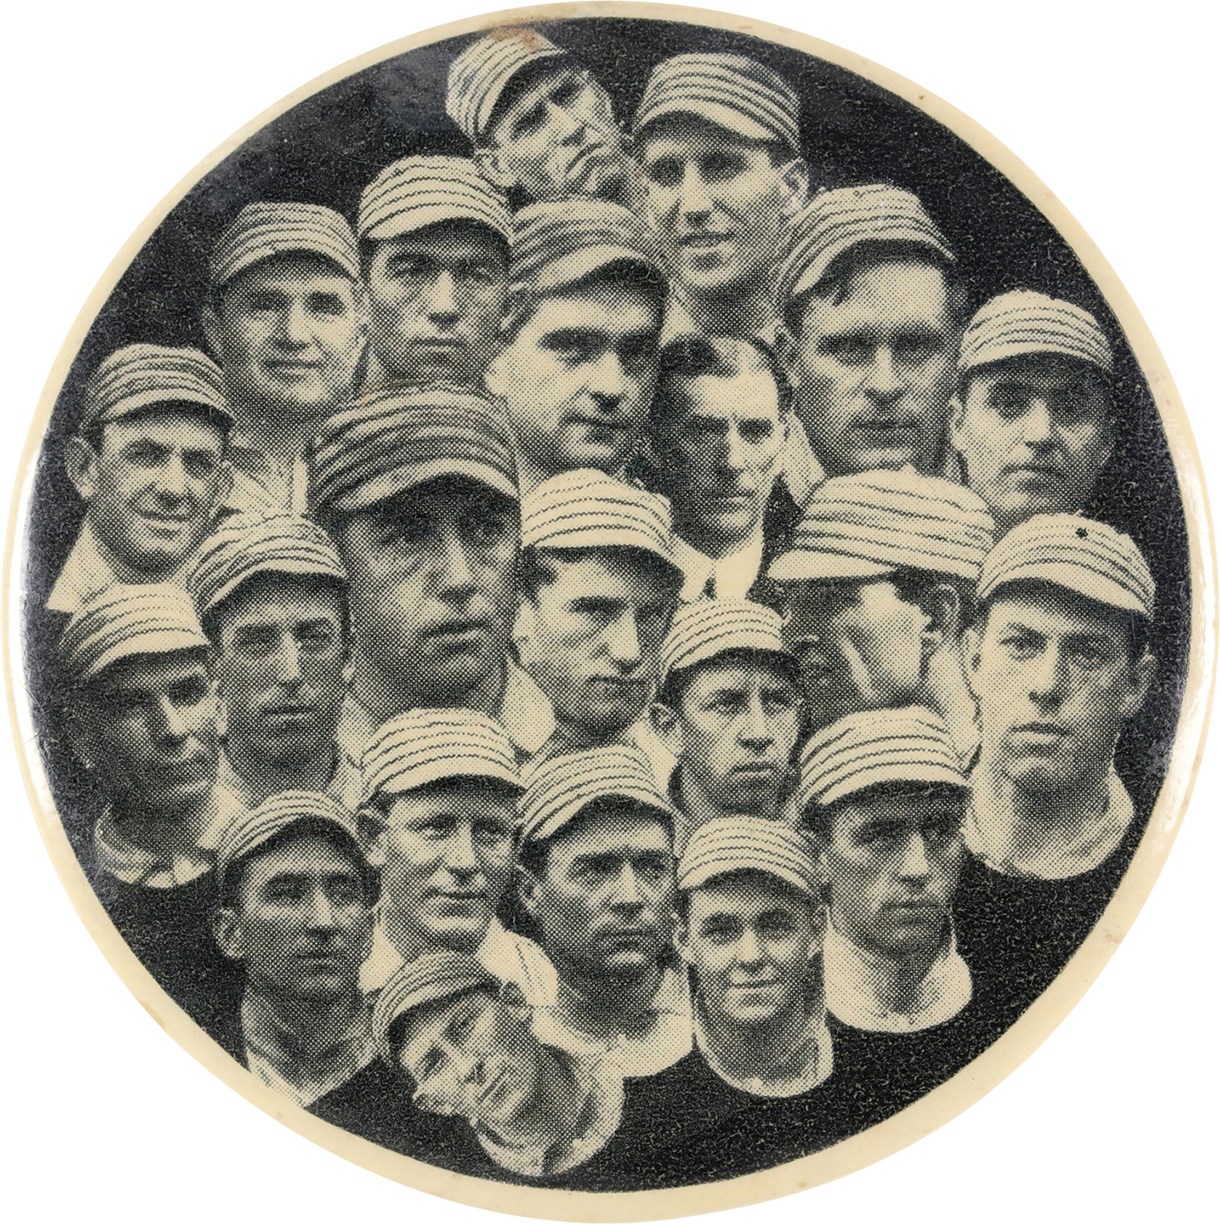 Baseball Memorabilia - Gorgeous 1913 World Champion Philadelphia Athletics Pinback Button (ex-Barry Halper Collection)